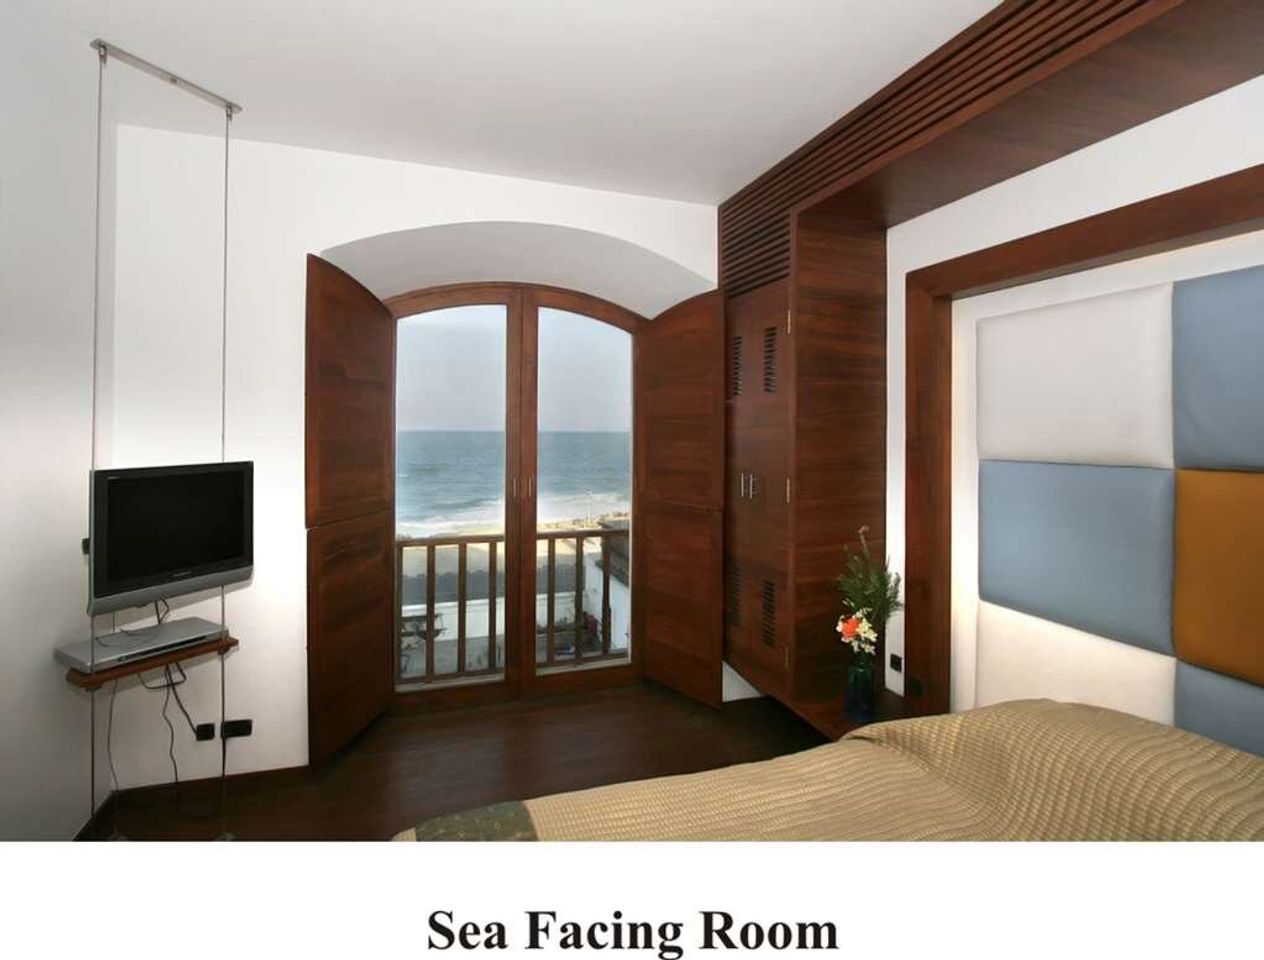 Sea Facing Room